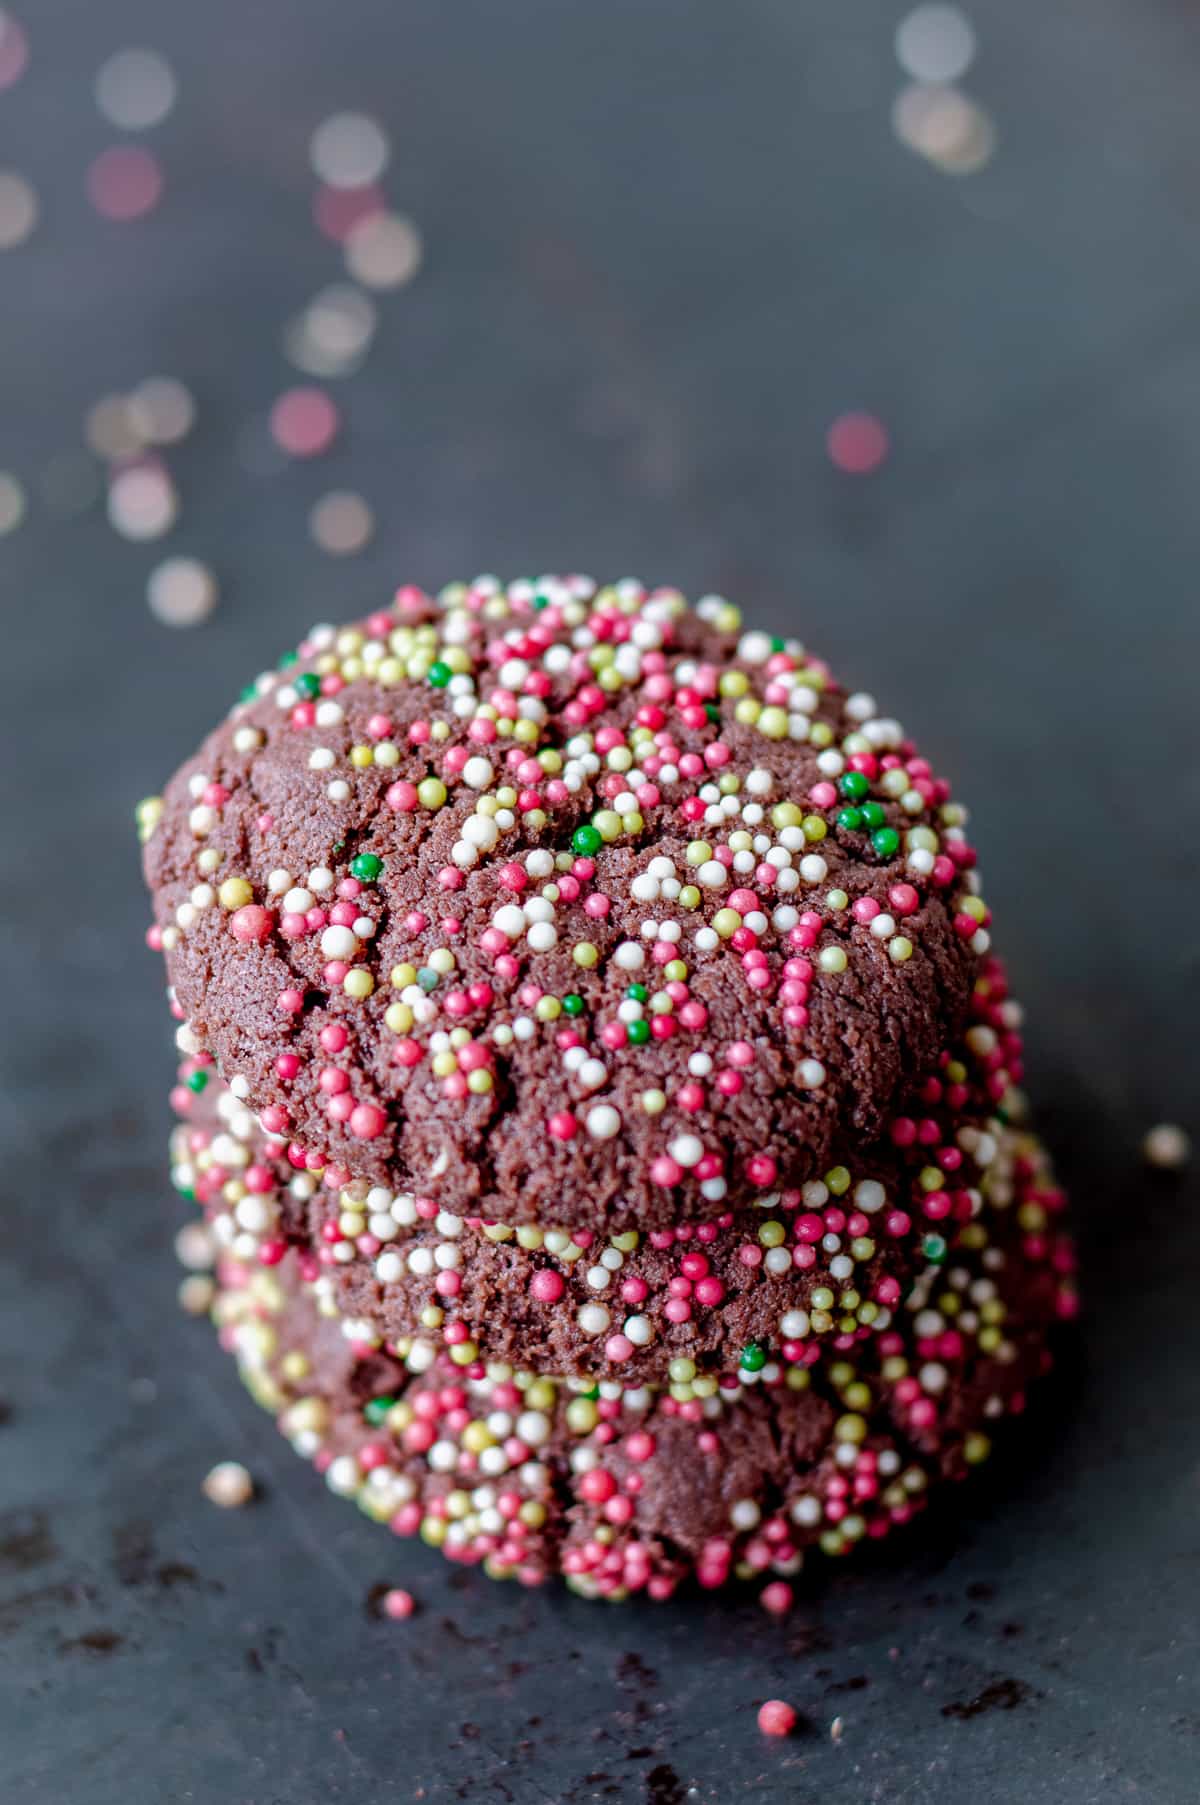 Chocolate cookies covered in festive sprinkles